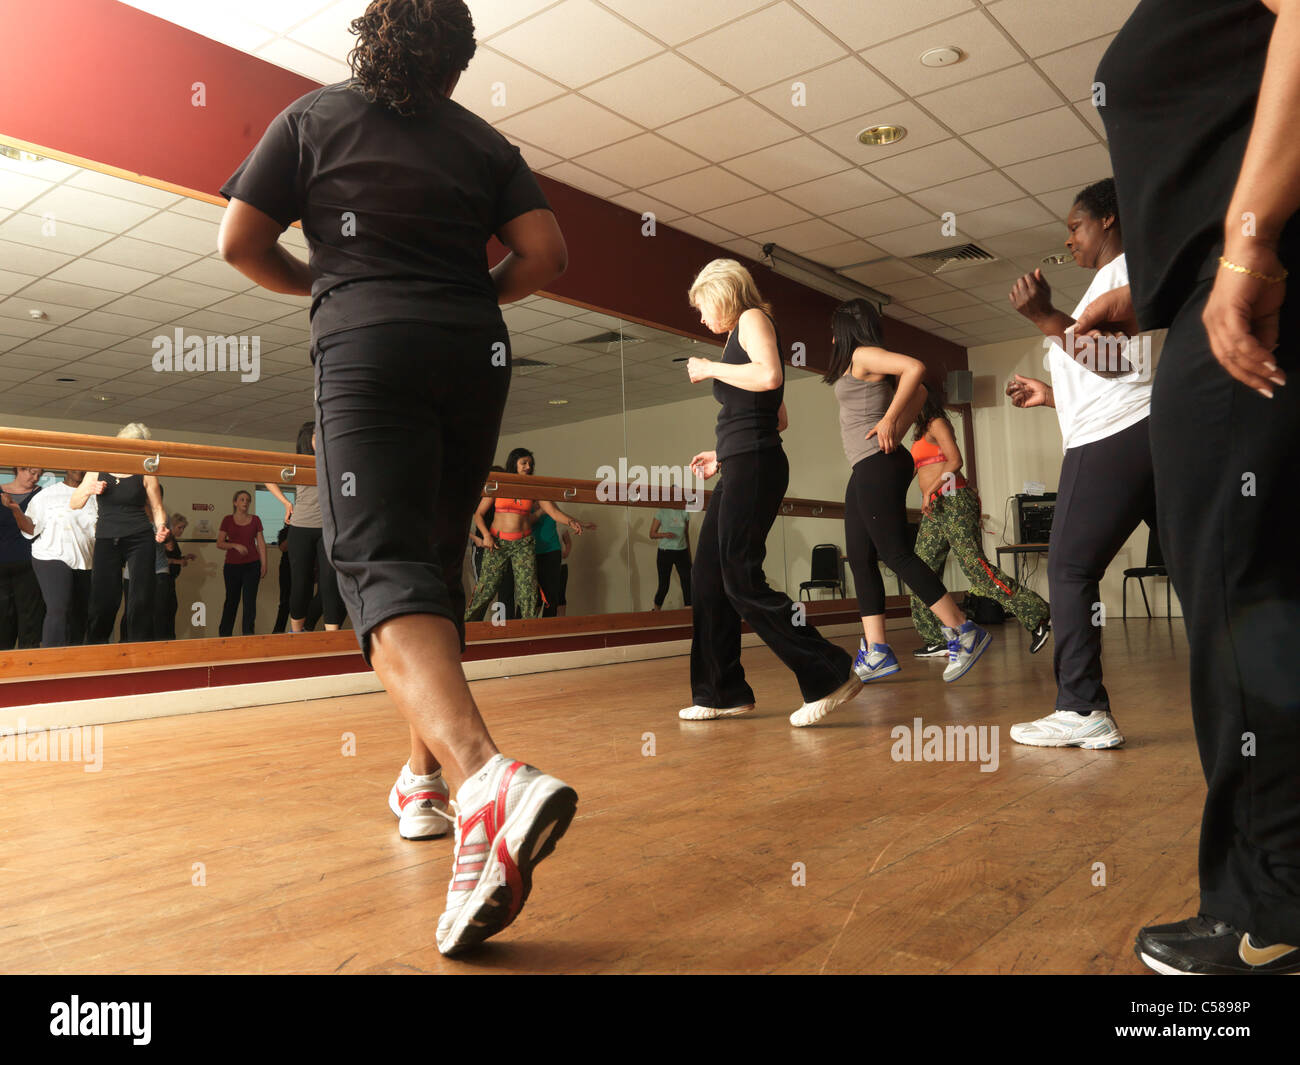 Zumba Dance Fitness Class Women Dancing In Front Of Mirror Stock Photo